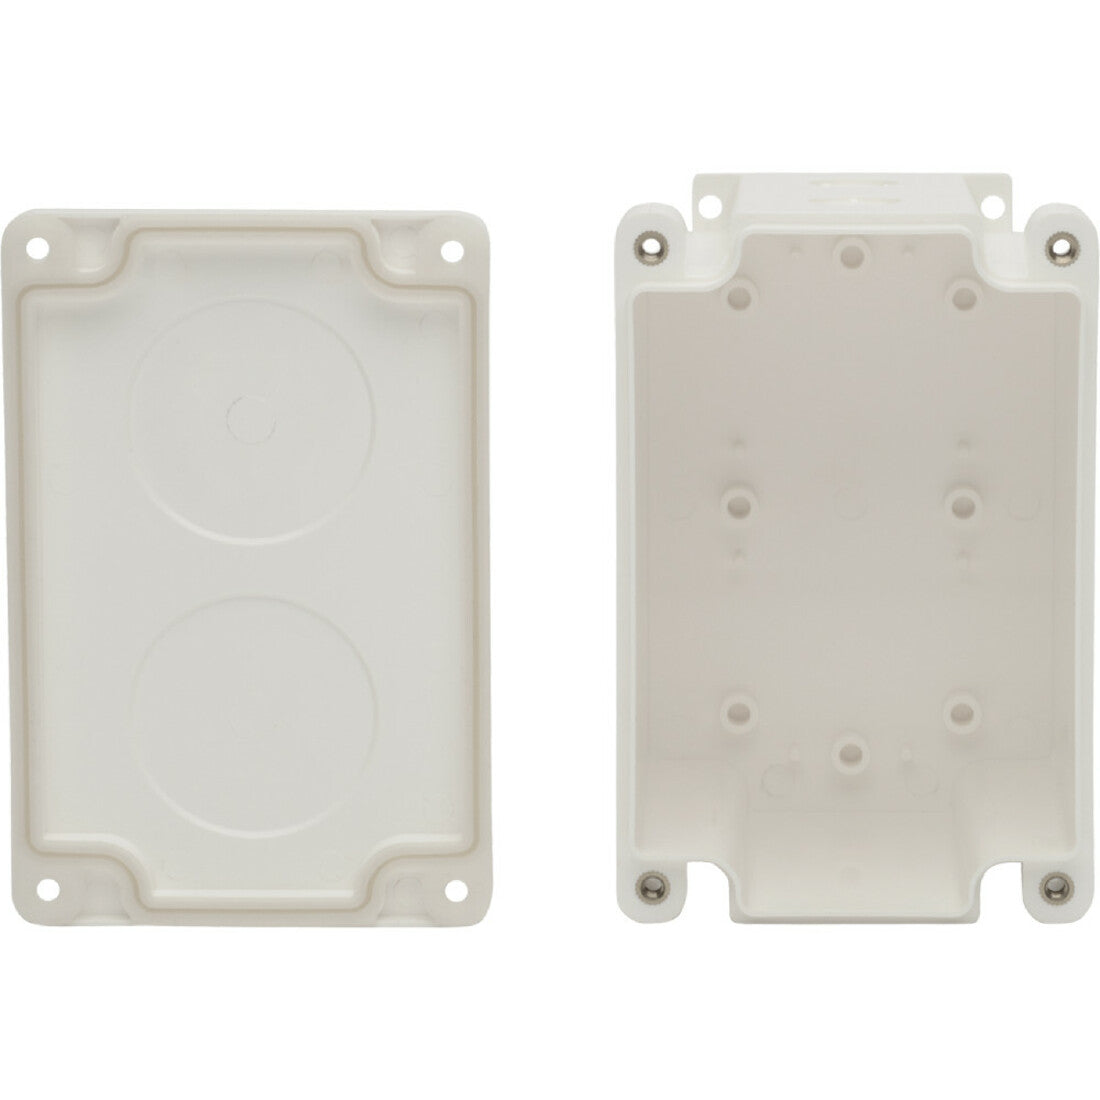 Tripp Lite by Eaton N206-SB01-IND Waterproof Electrical Junction Box, Surface Mounting Box